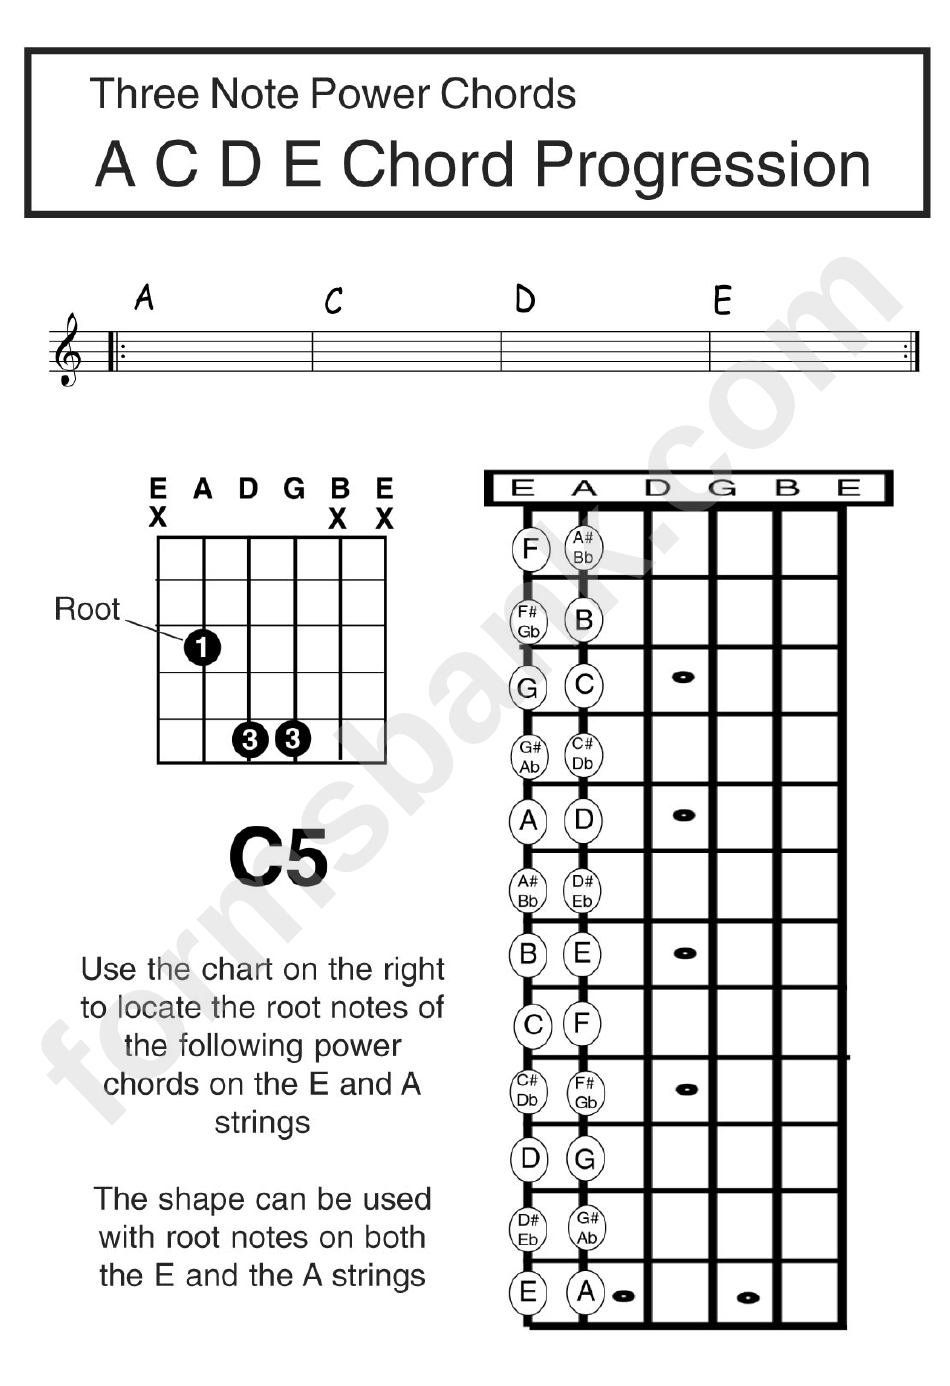 A C D E Chord Progression Chart